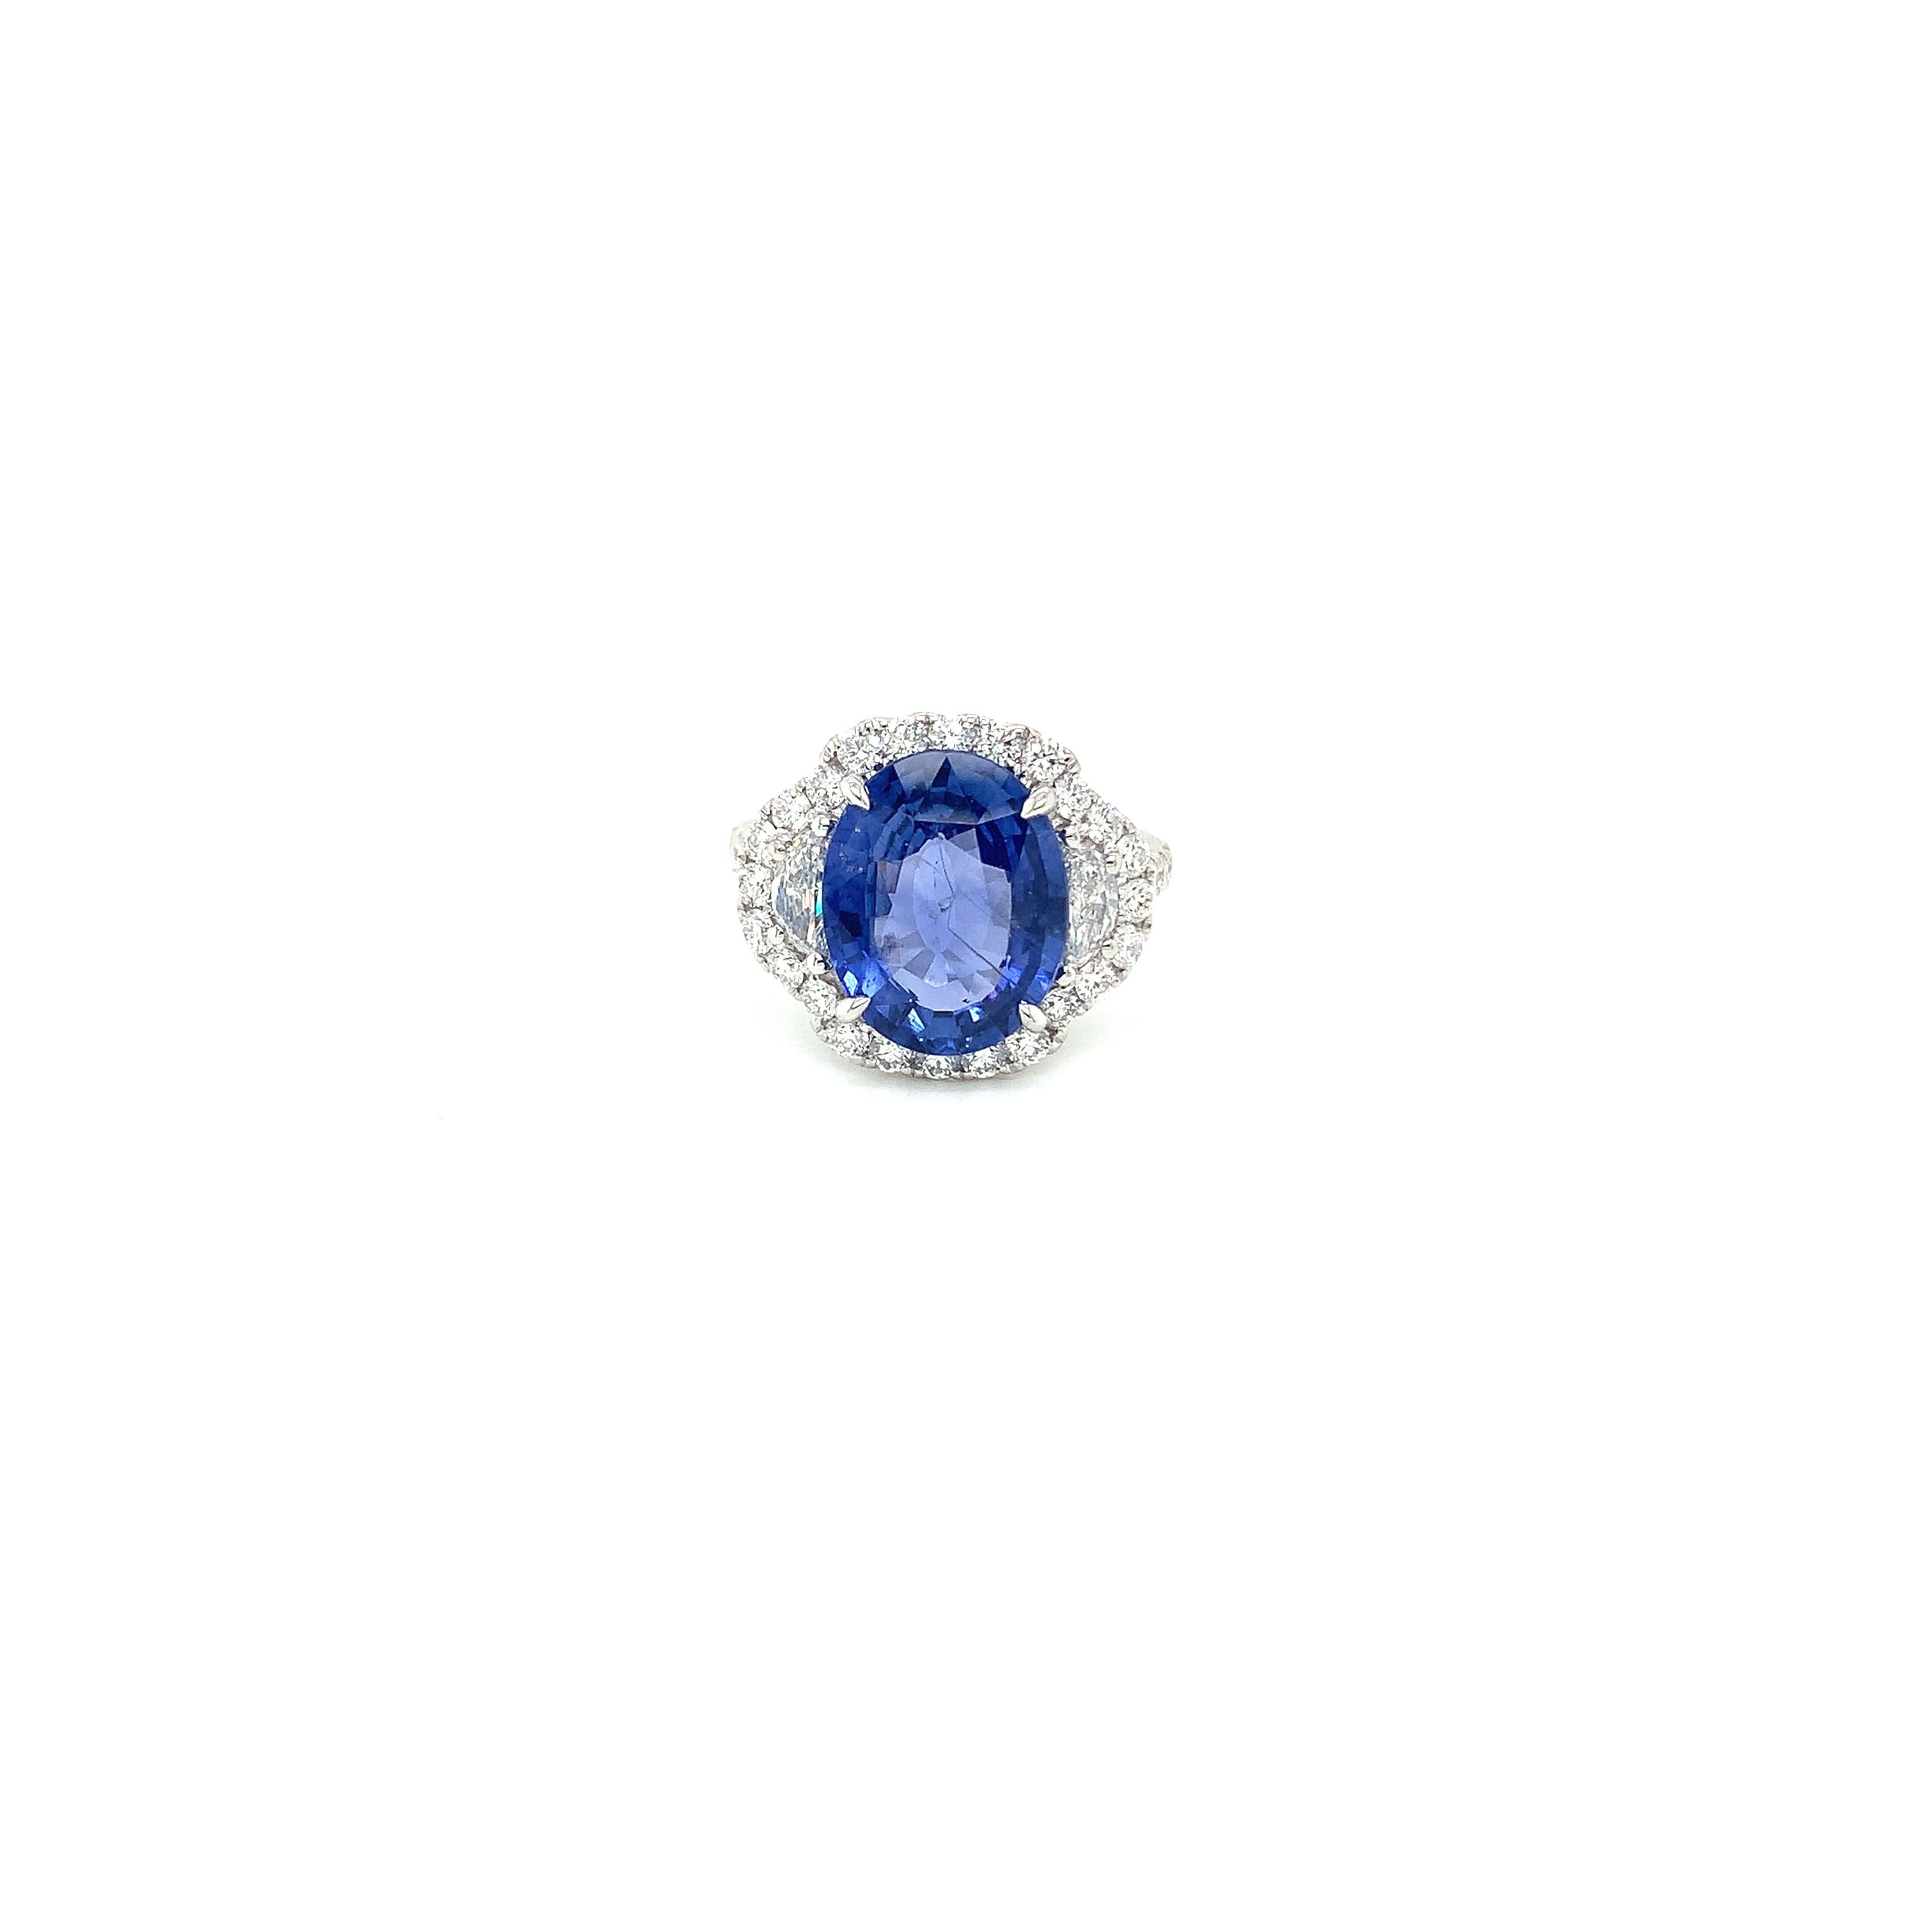 Saphir bleu ovale pesant 5.86 cts
Mesure (12,7x10,3) mm
Diamants demi-lune pesant .39 cts
34 diamants ronds pesant .83 cts
Bague en or blanc 18k
5.08 grammes